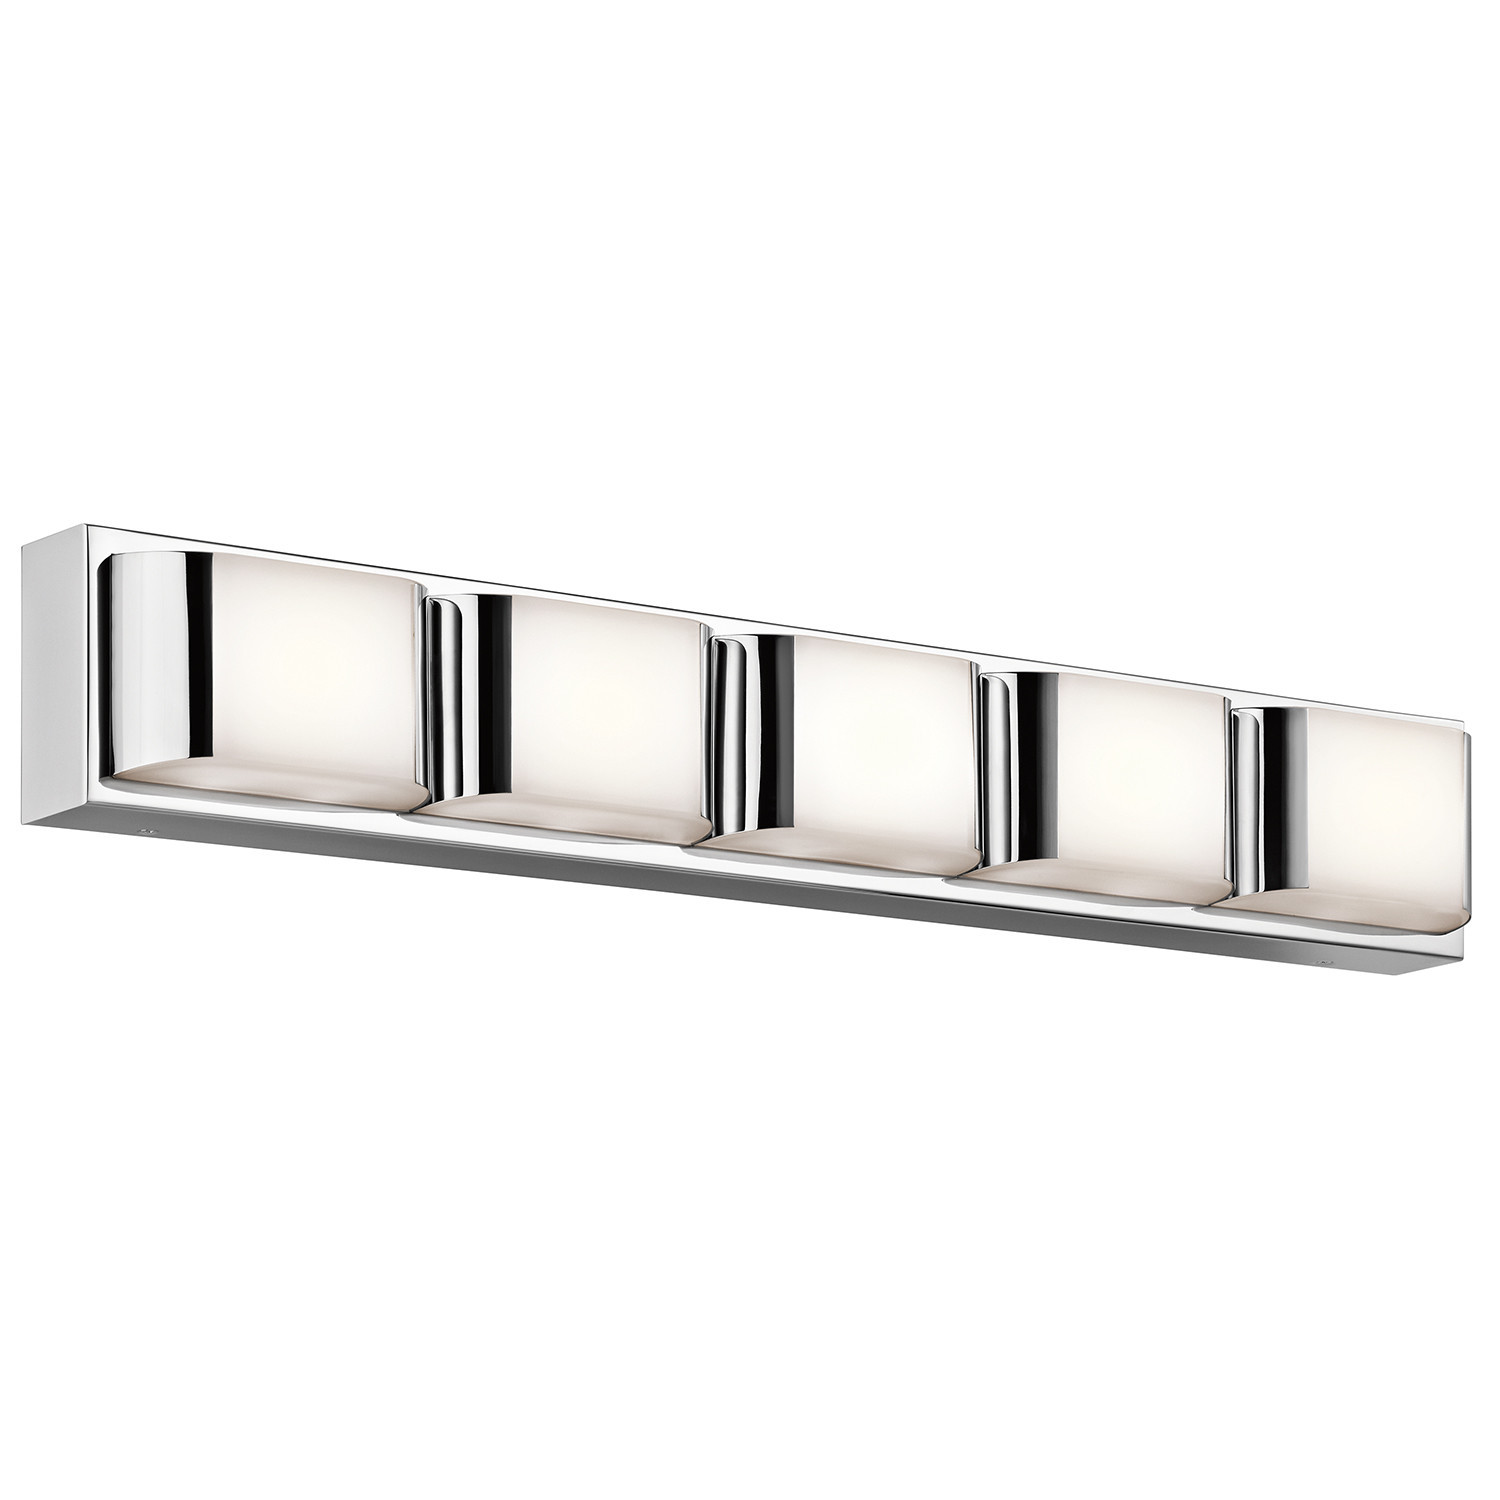 Best ideas about Bathroom Light Bar
. Save or Pin 5 Light Bath Bar Now.